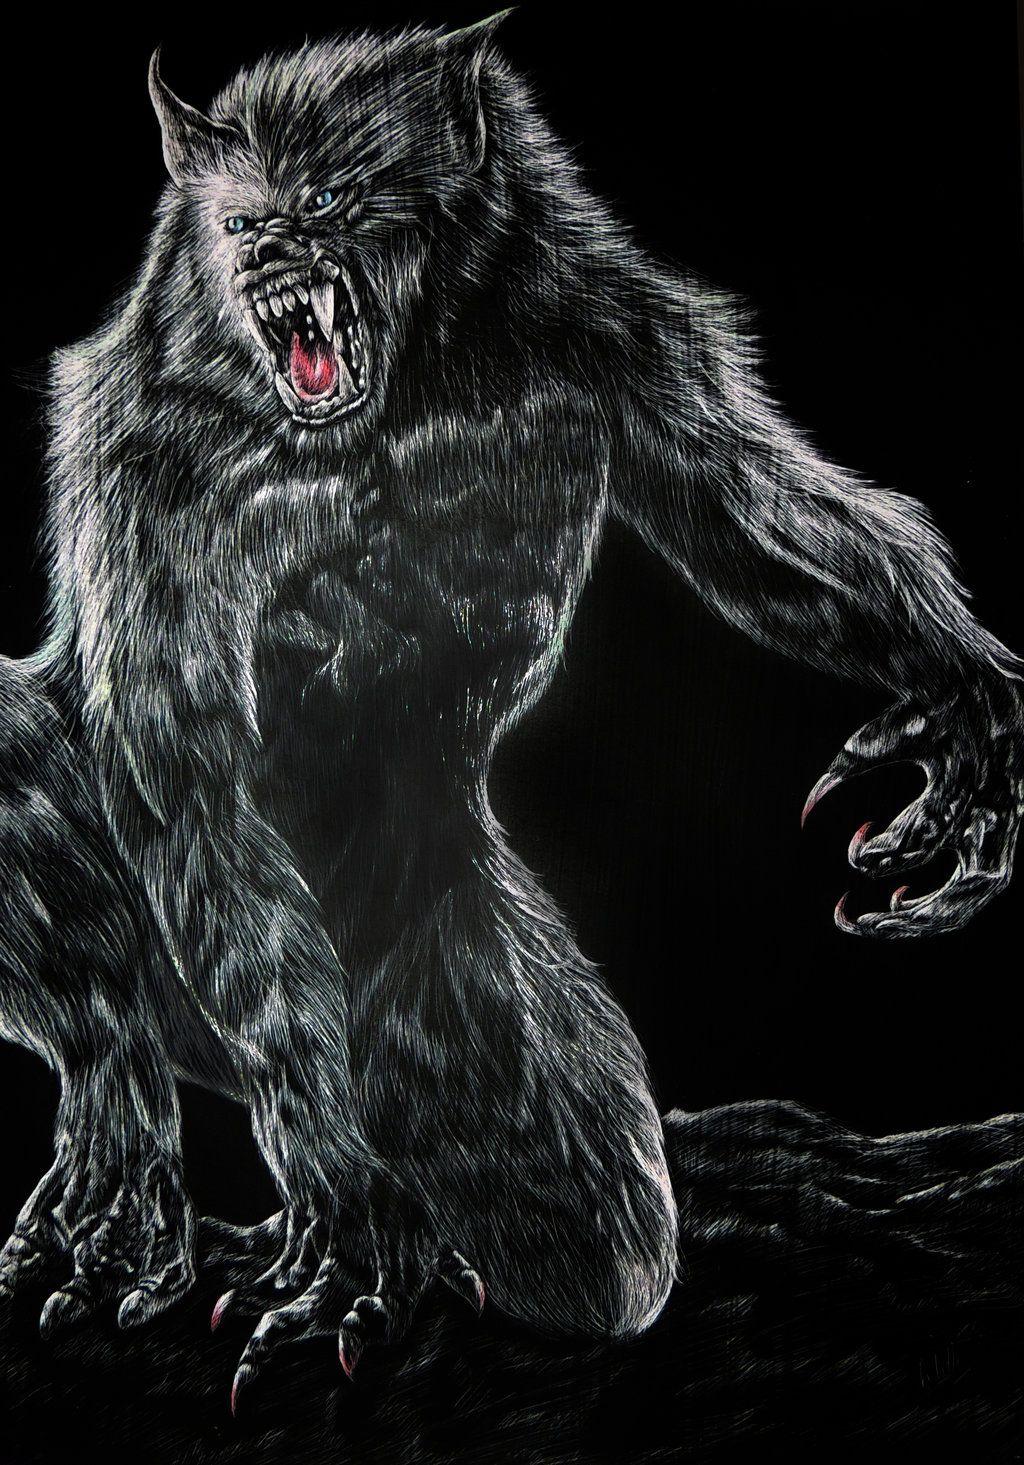 Van Helsing Werewolf Wallpaper Picture Earthly Wallpaper 1080p